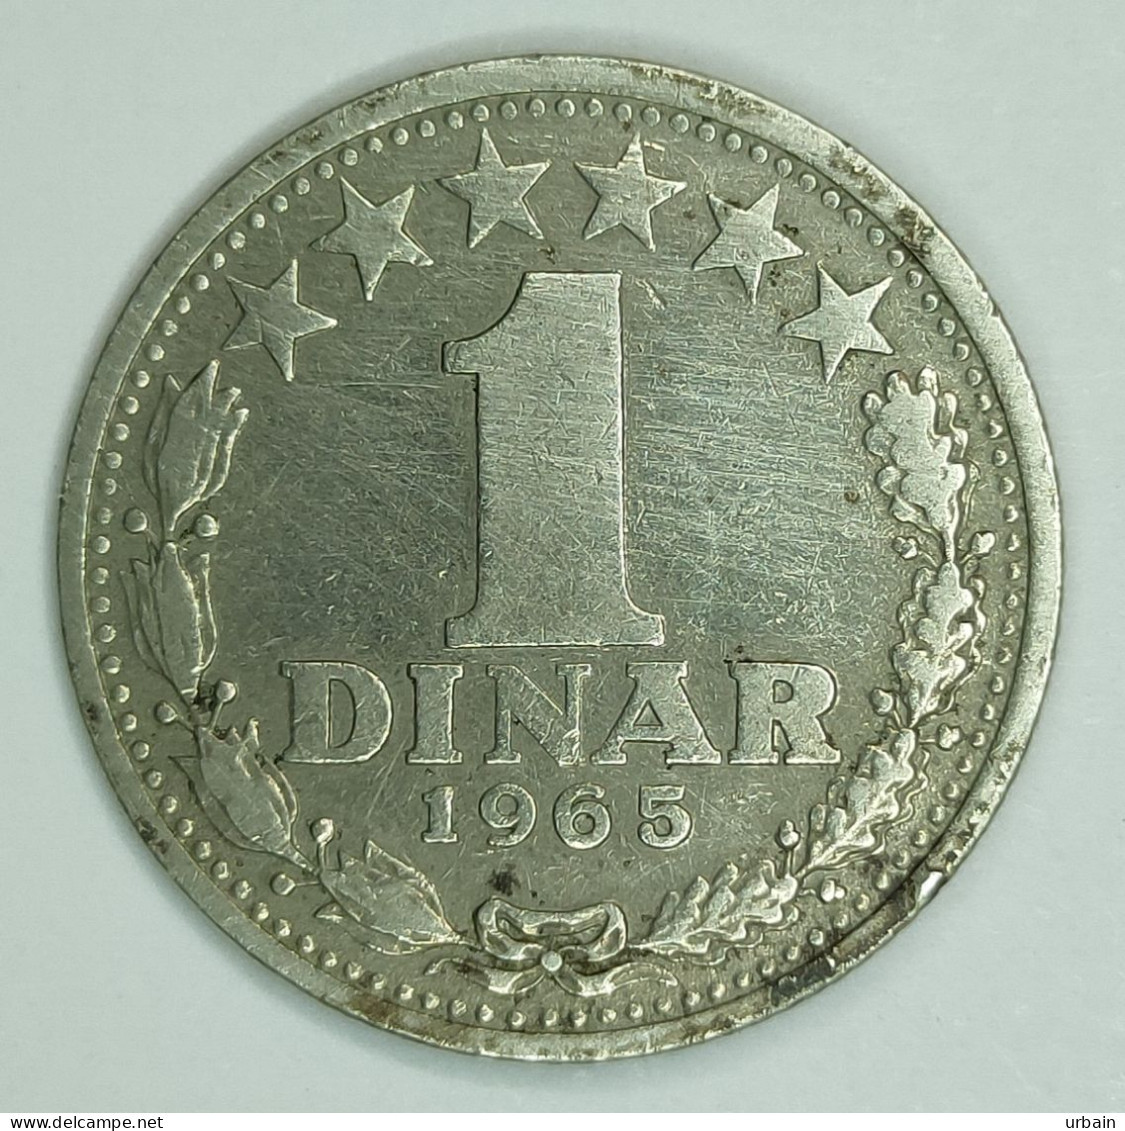 Lot 5 coins - YUGOSLAVIA - from 1955 to 1977 - Socialist Yugoslavia